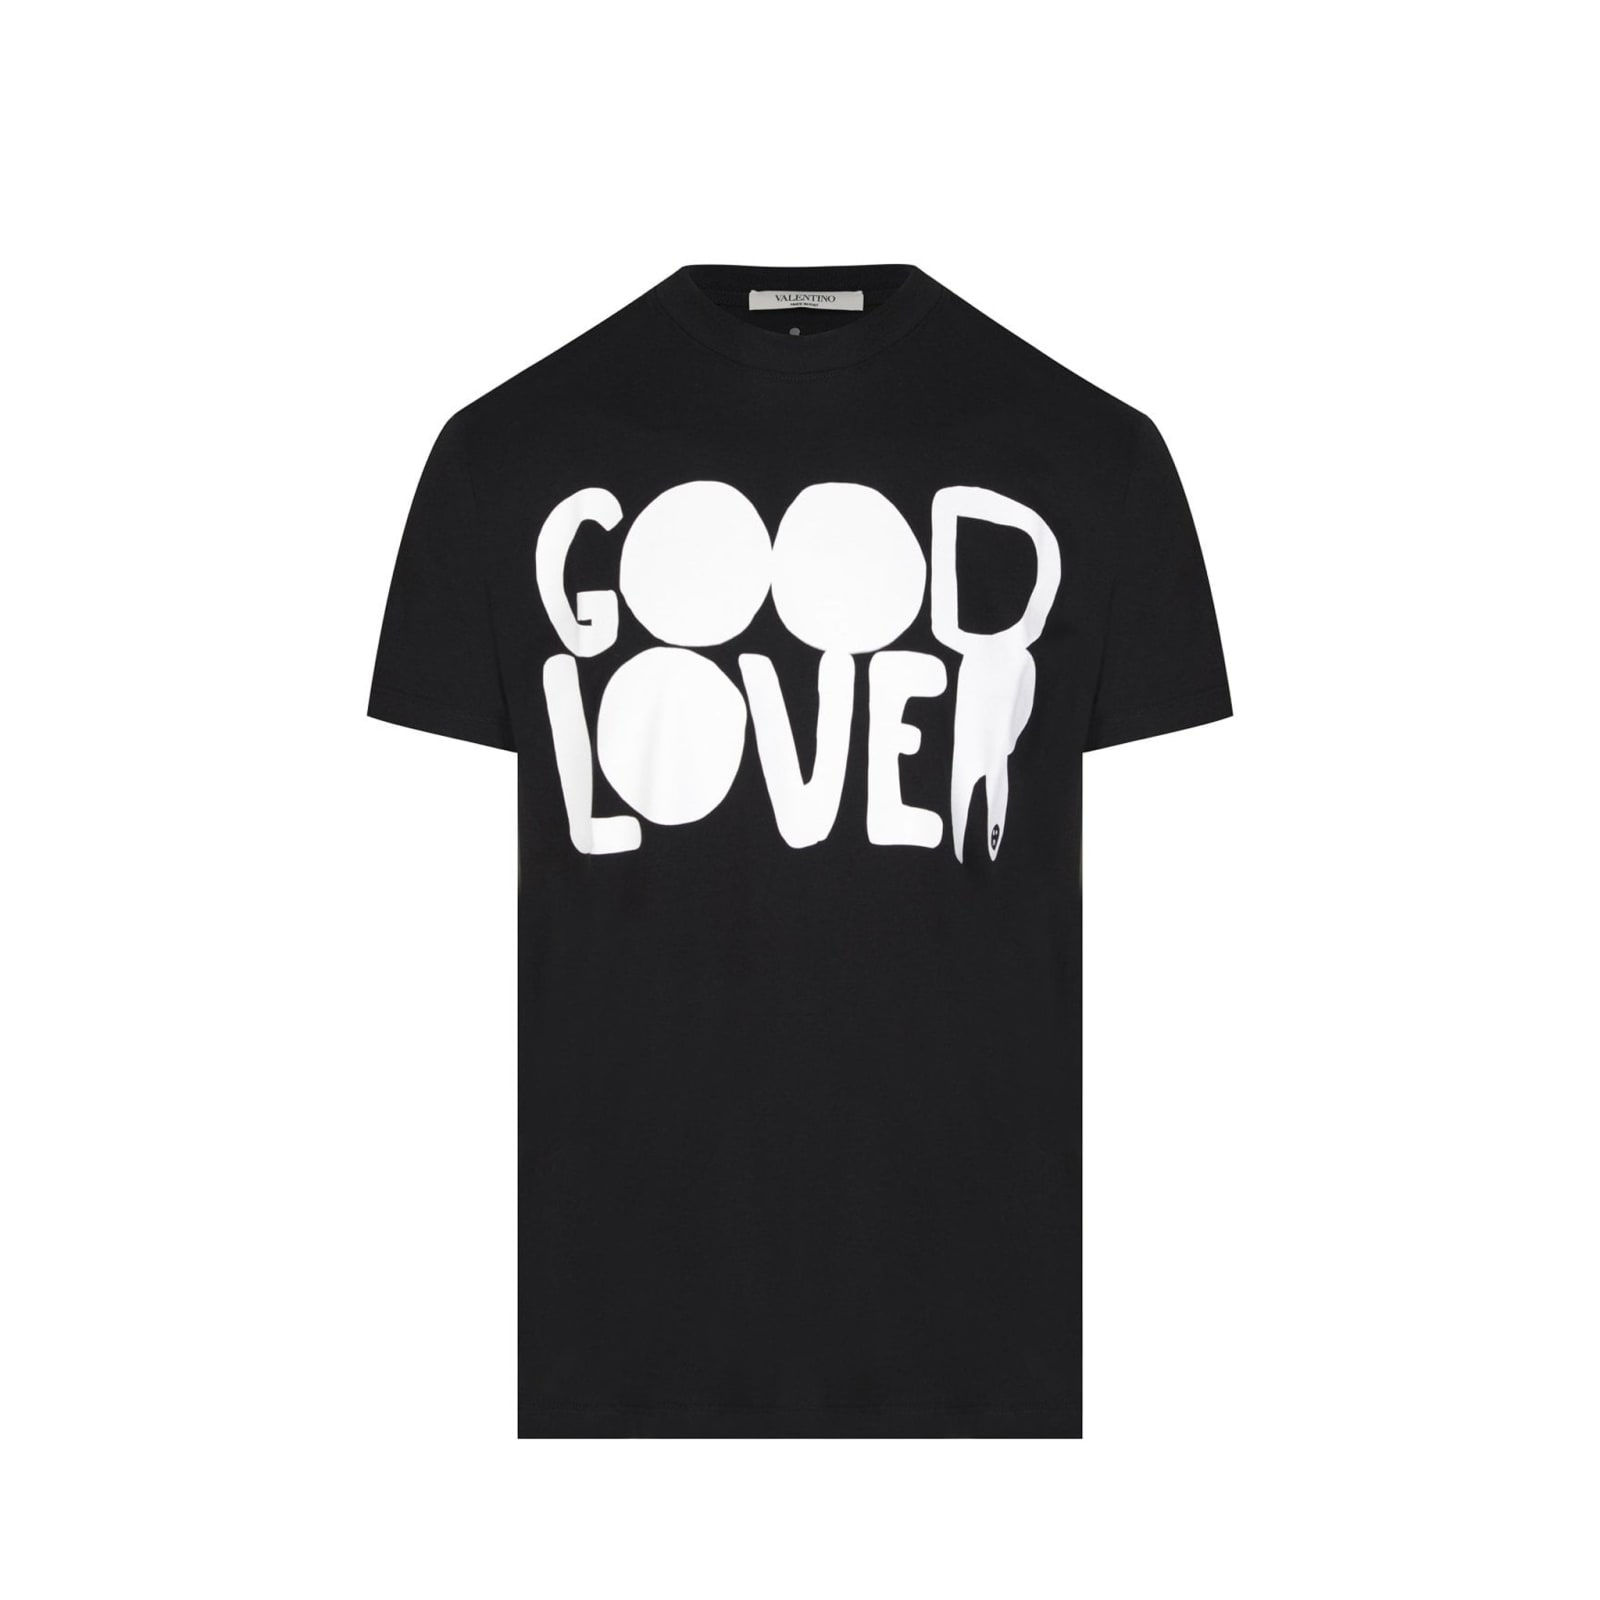 Valentino Good Lover T-shirt In Black